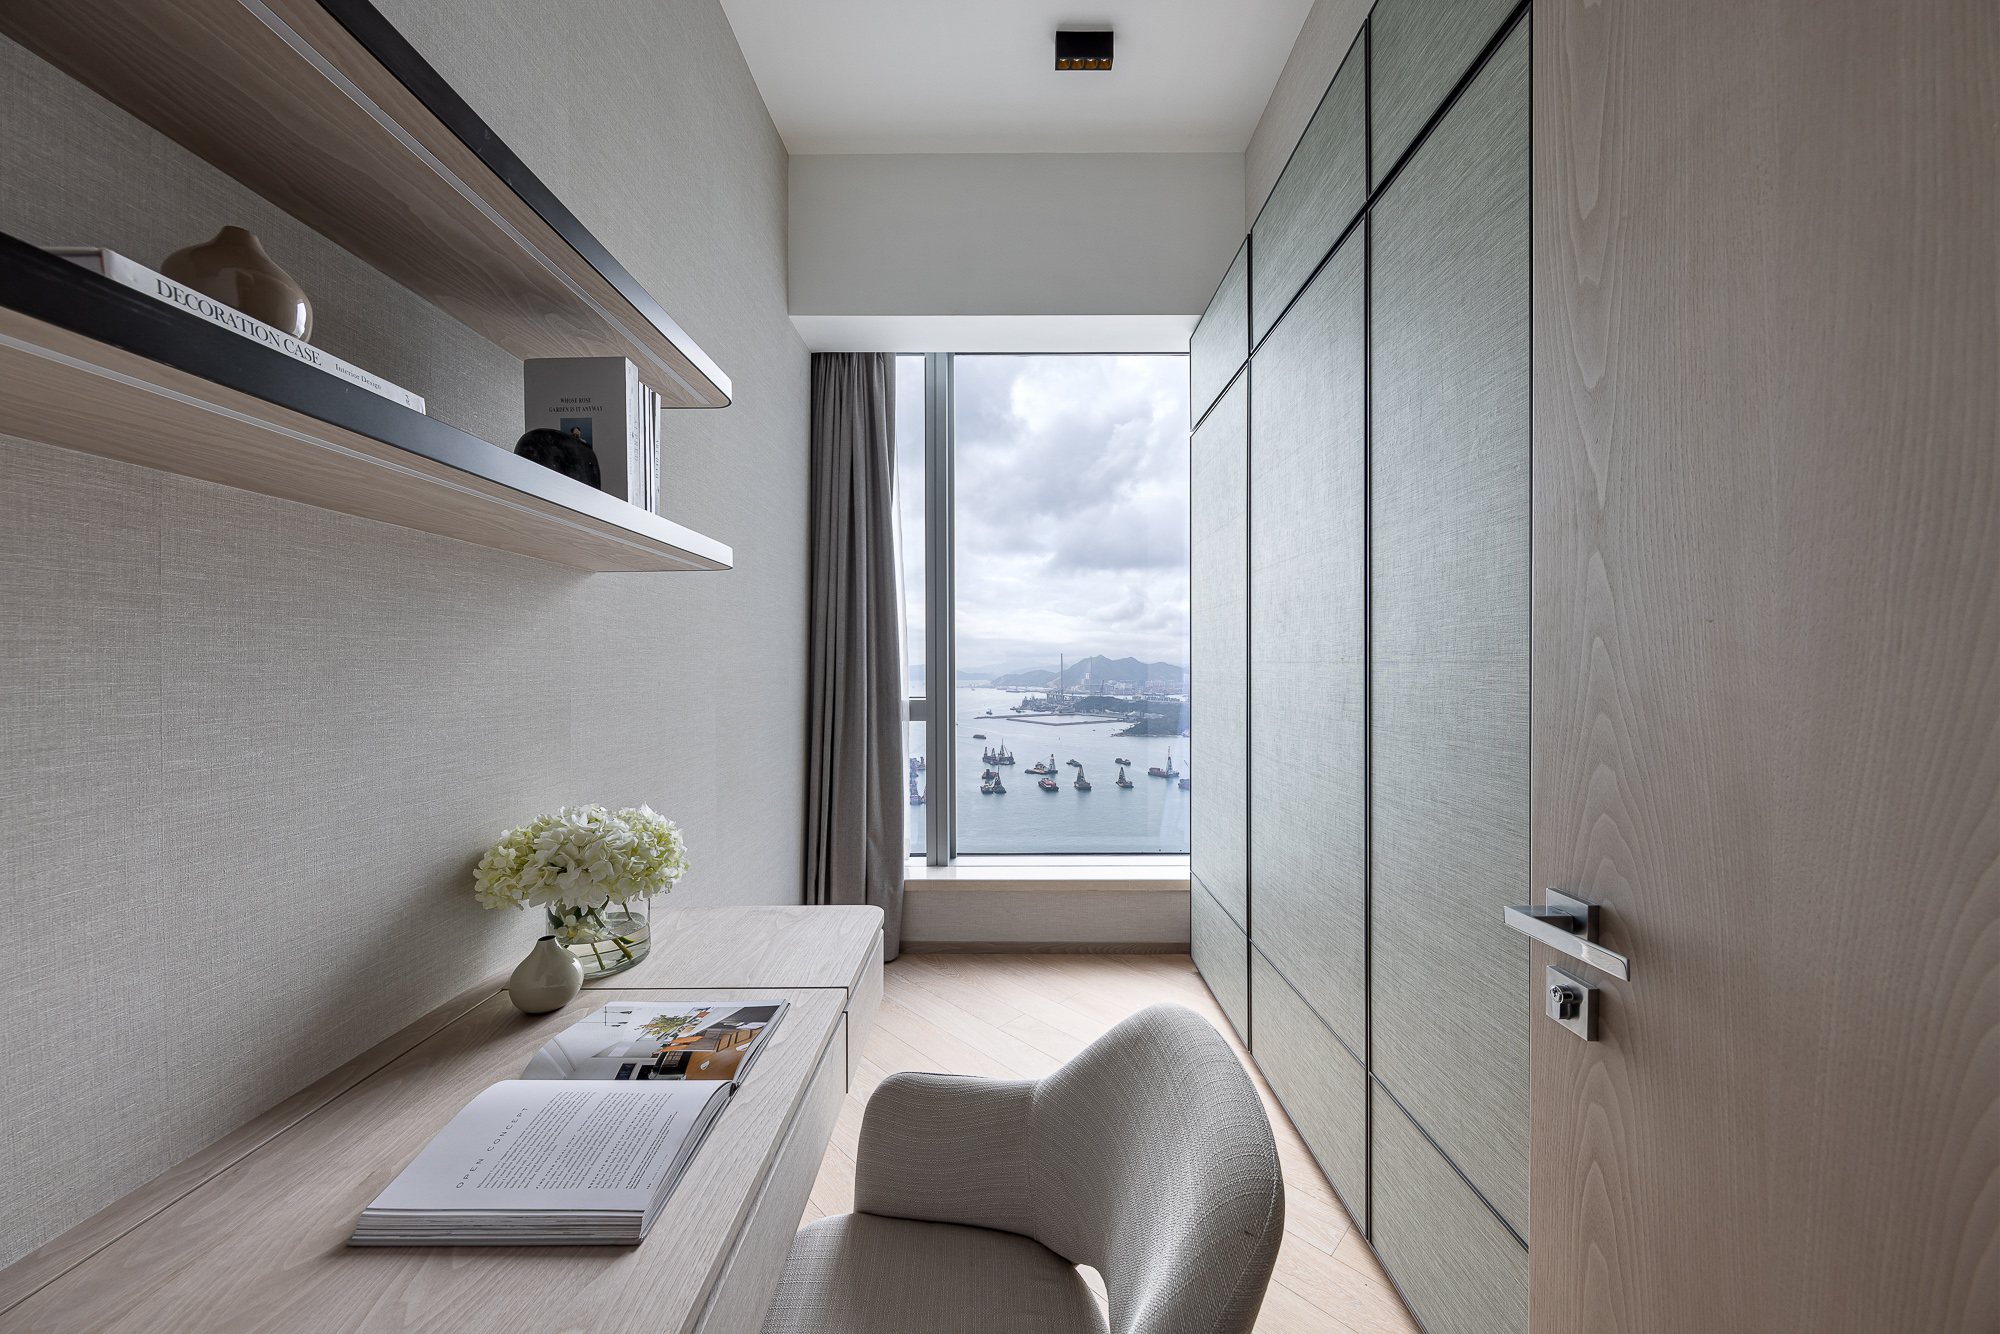 Maggy Cheung - Grande Interior Design - The Cullinan